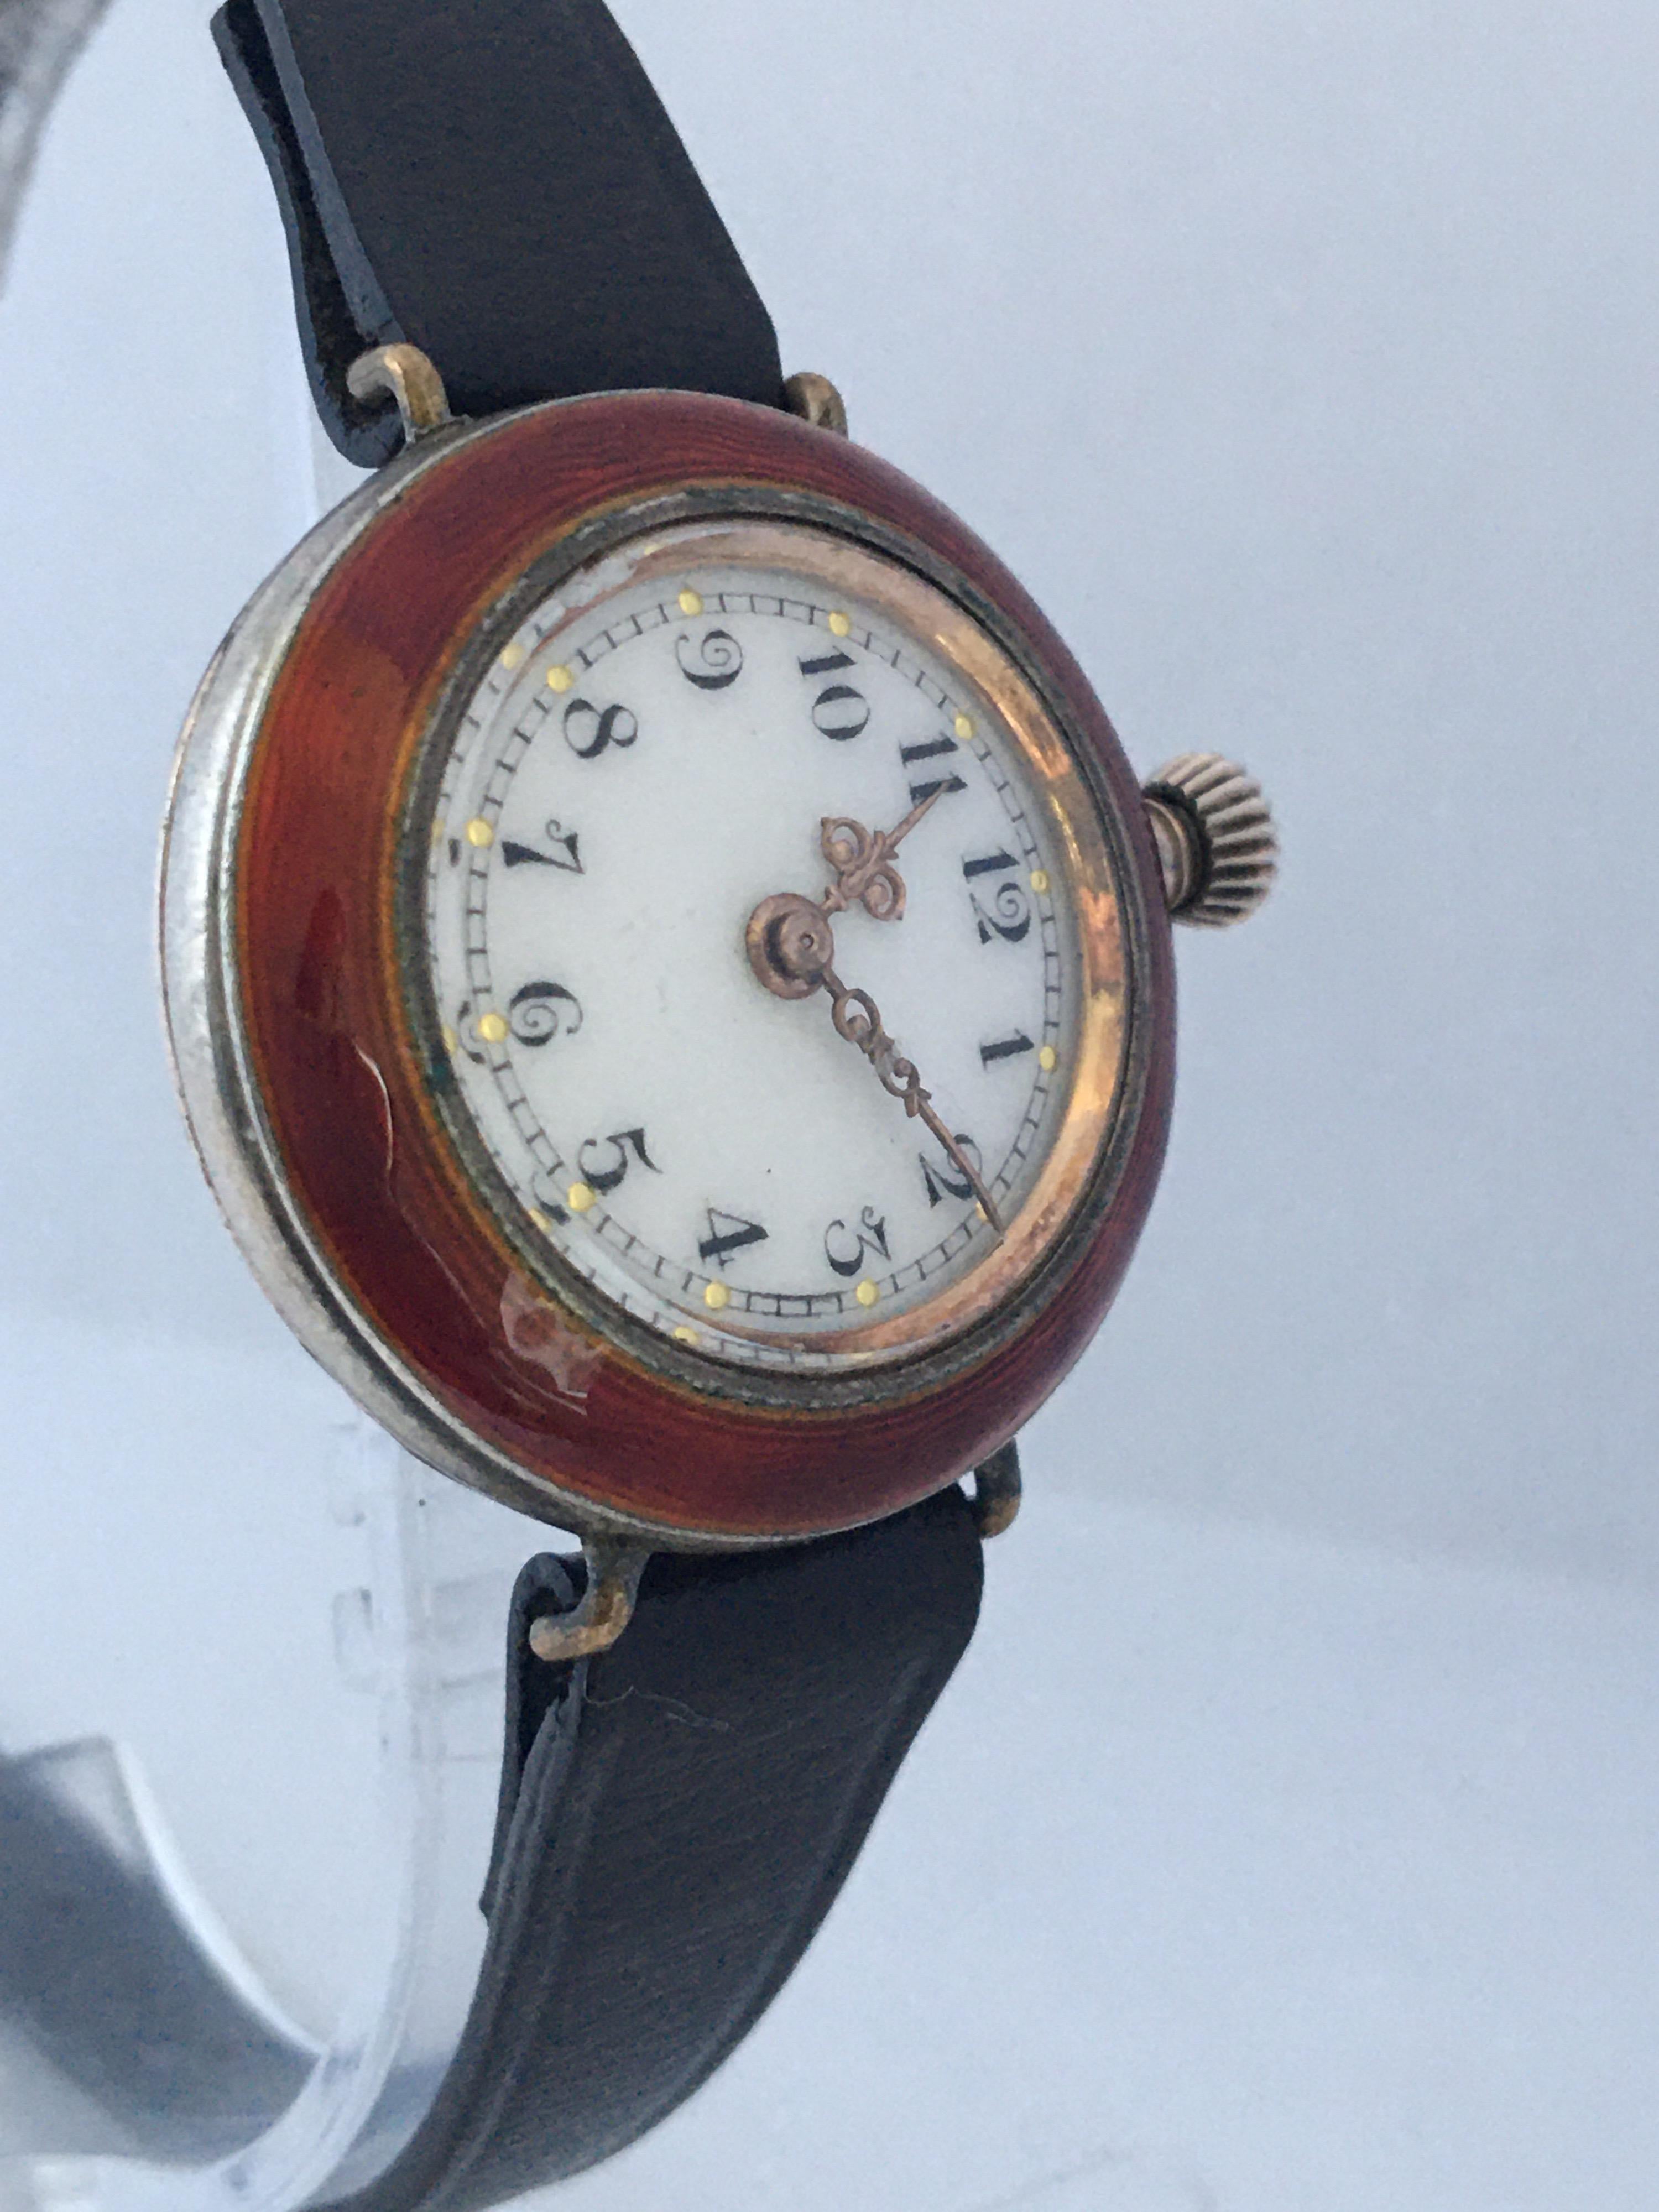 19th century wrist watch